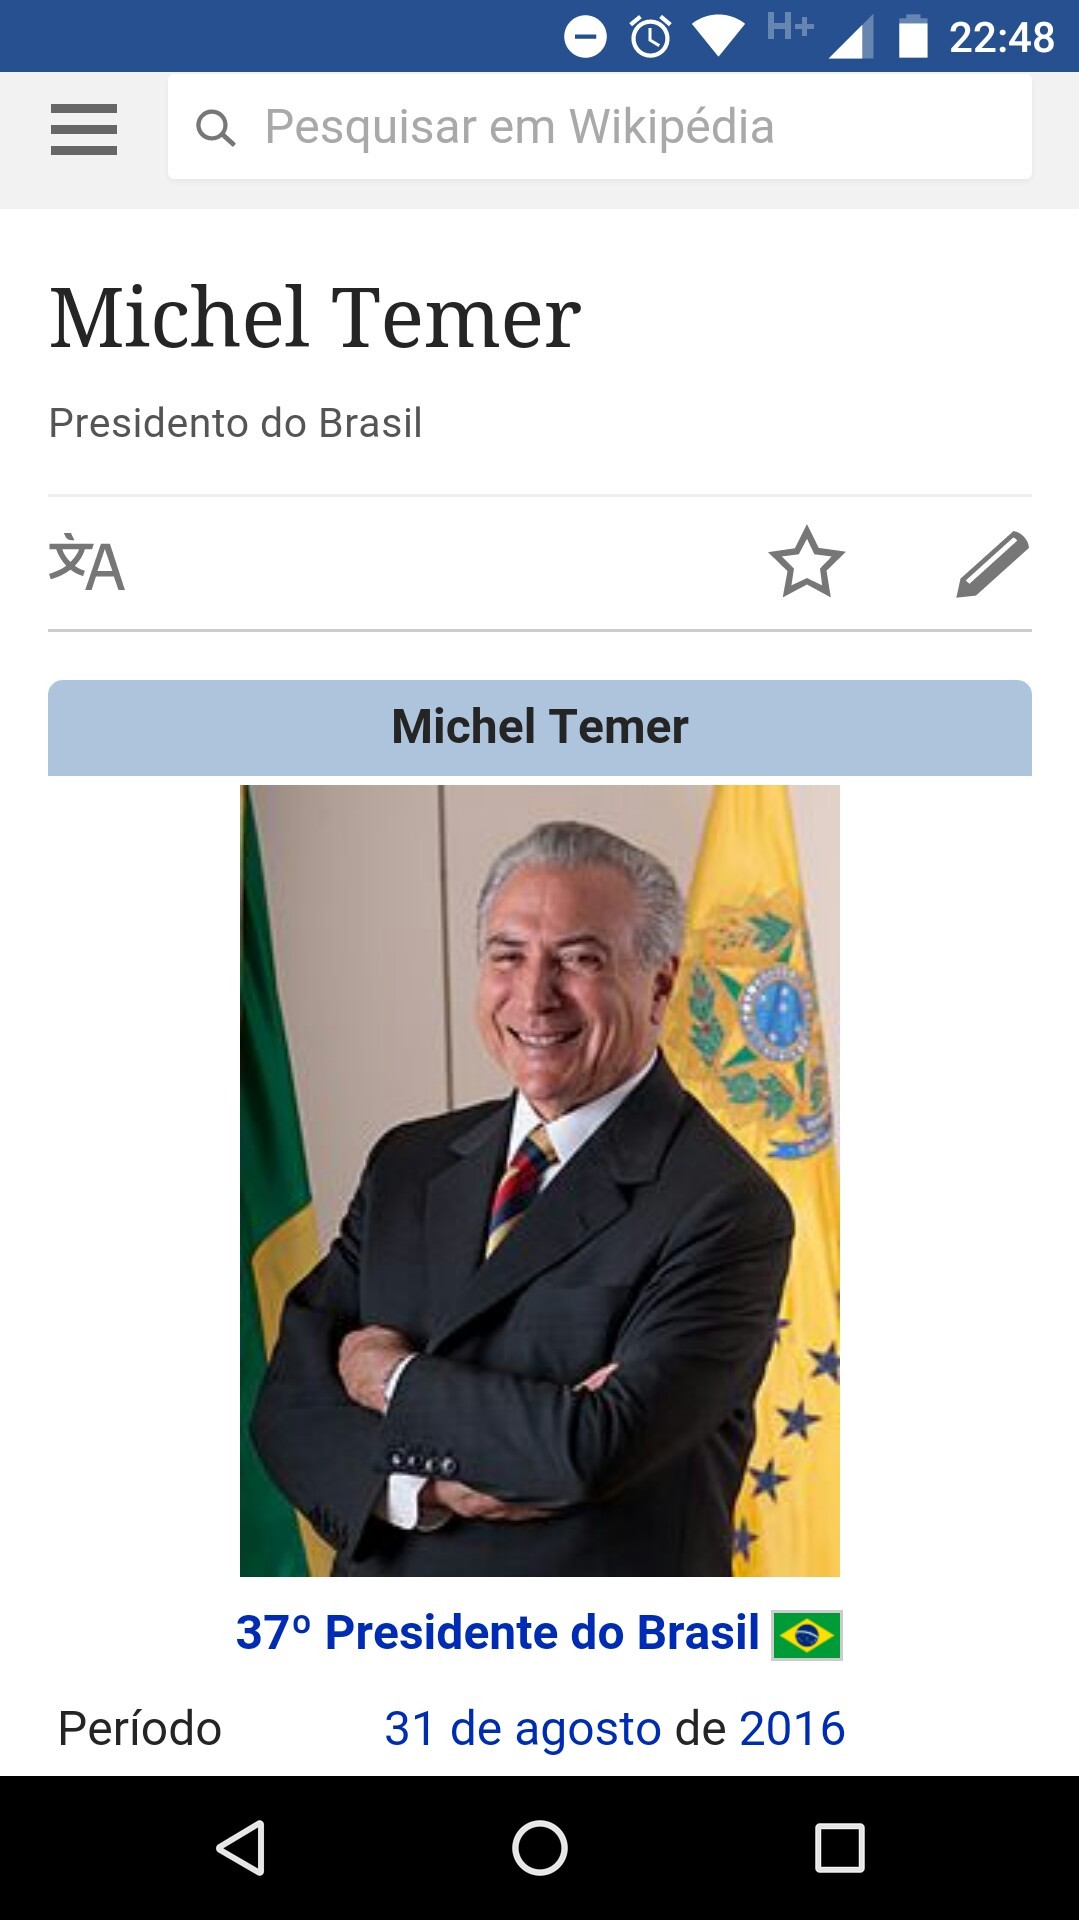 "Presidento" do Brasil. Agshagshagsyagsg - meme